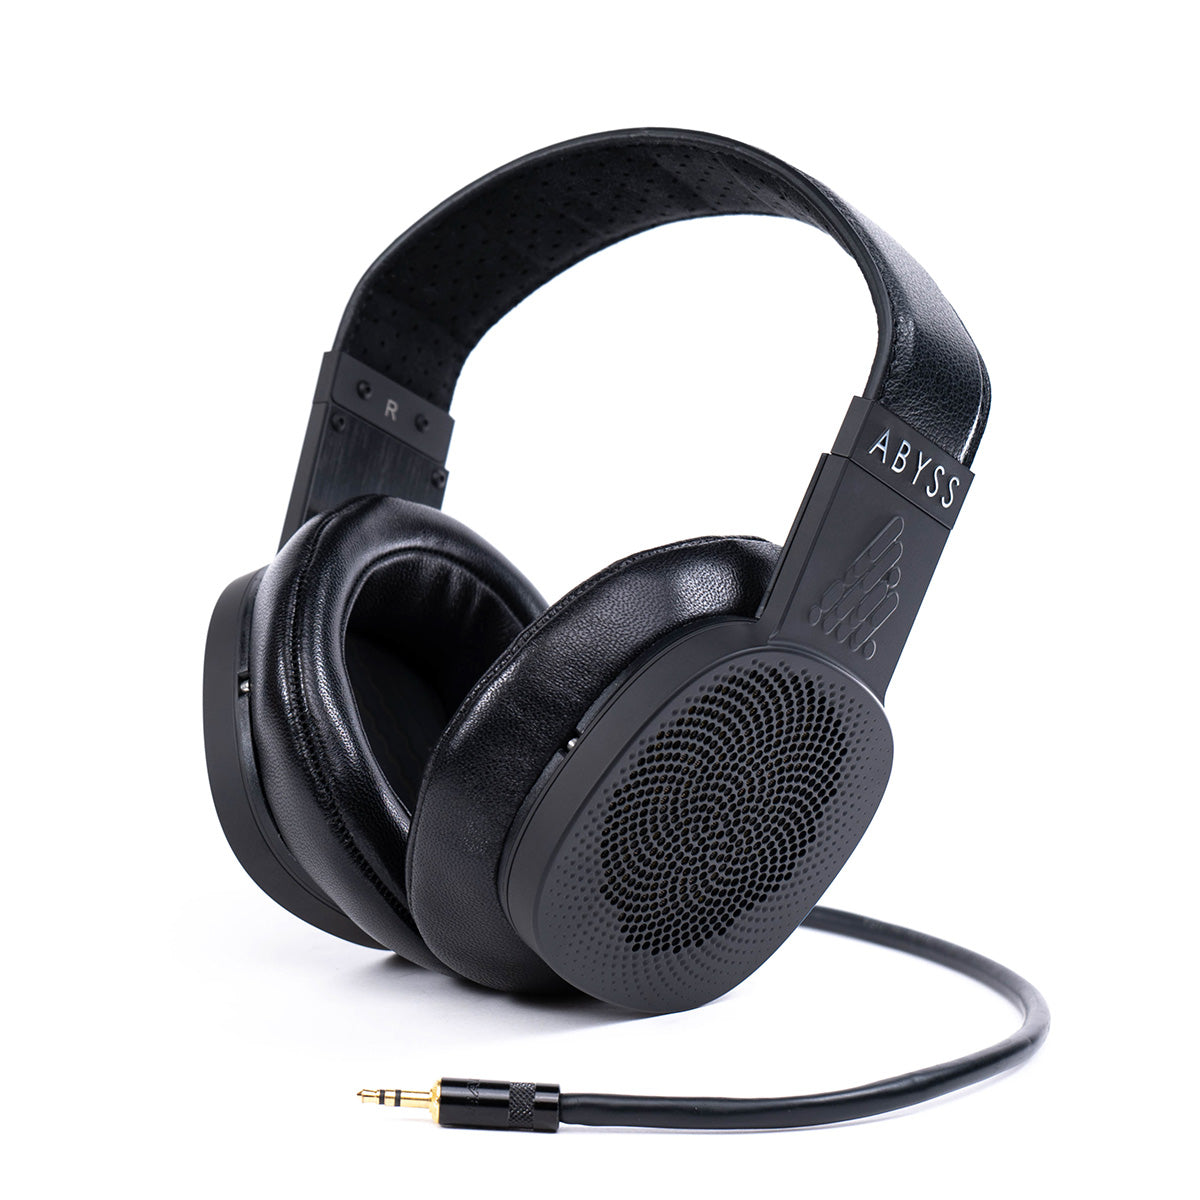 DIANA V2 Premium Luxury Headphones by ABYSS